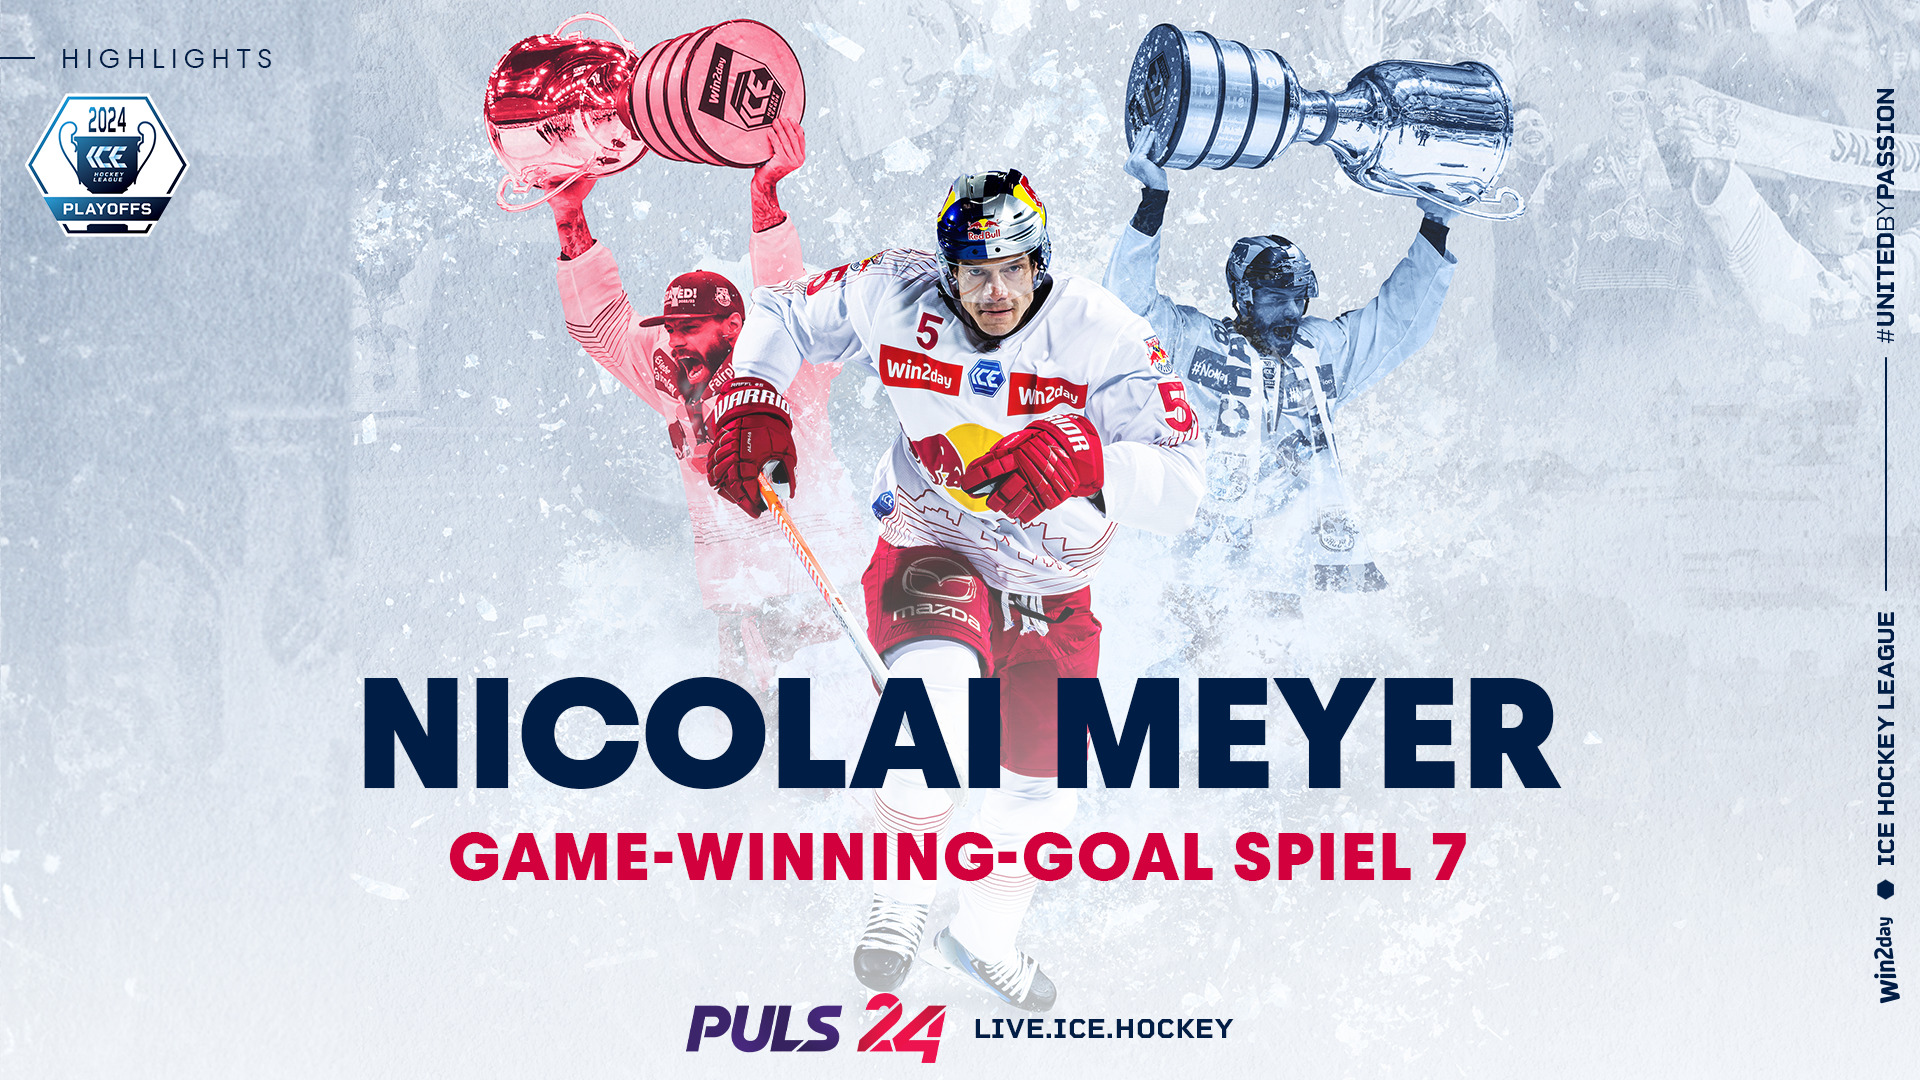 Highlights: Nicolai Meyer Game-Winning-Goal in Spiel 7